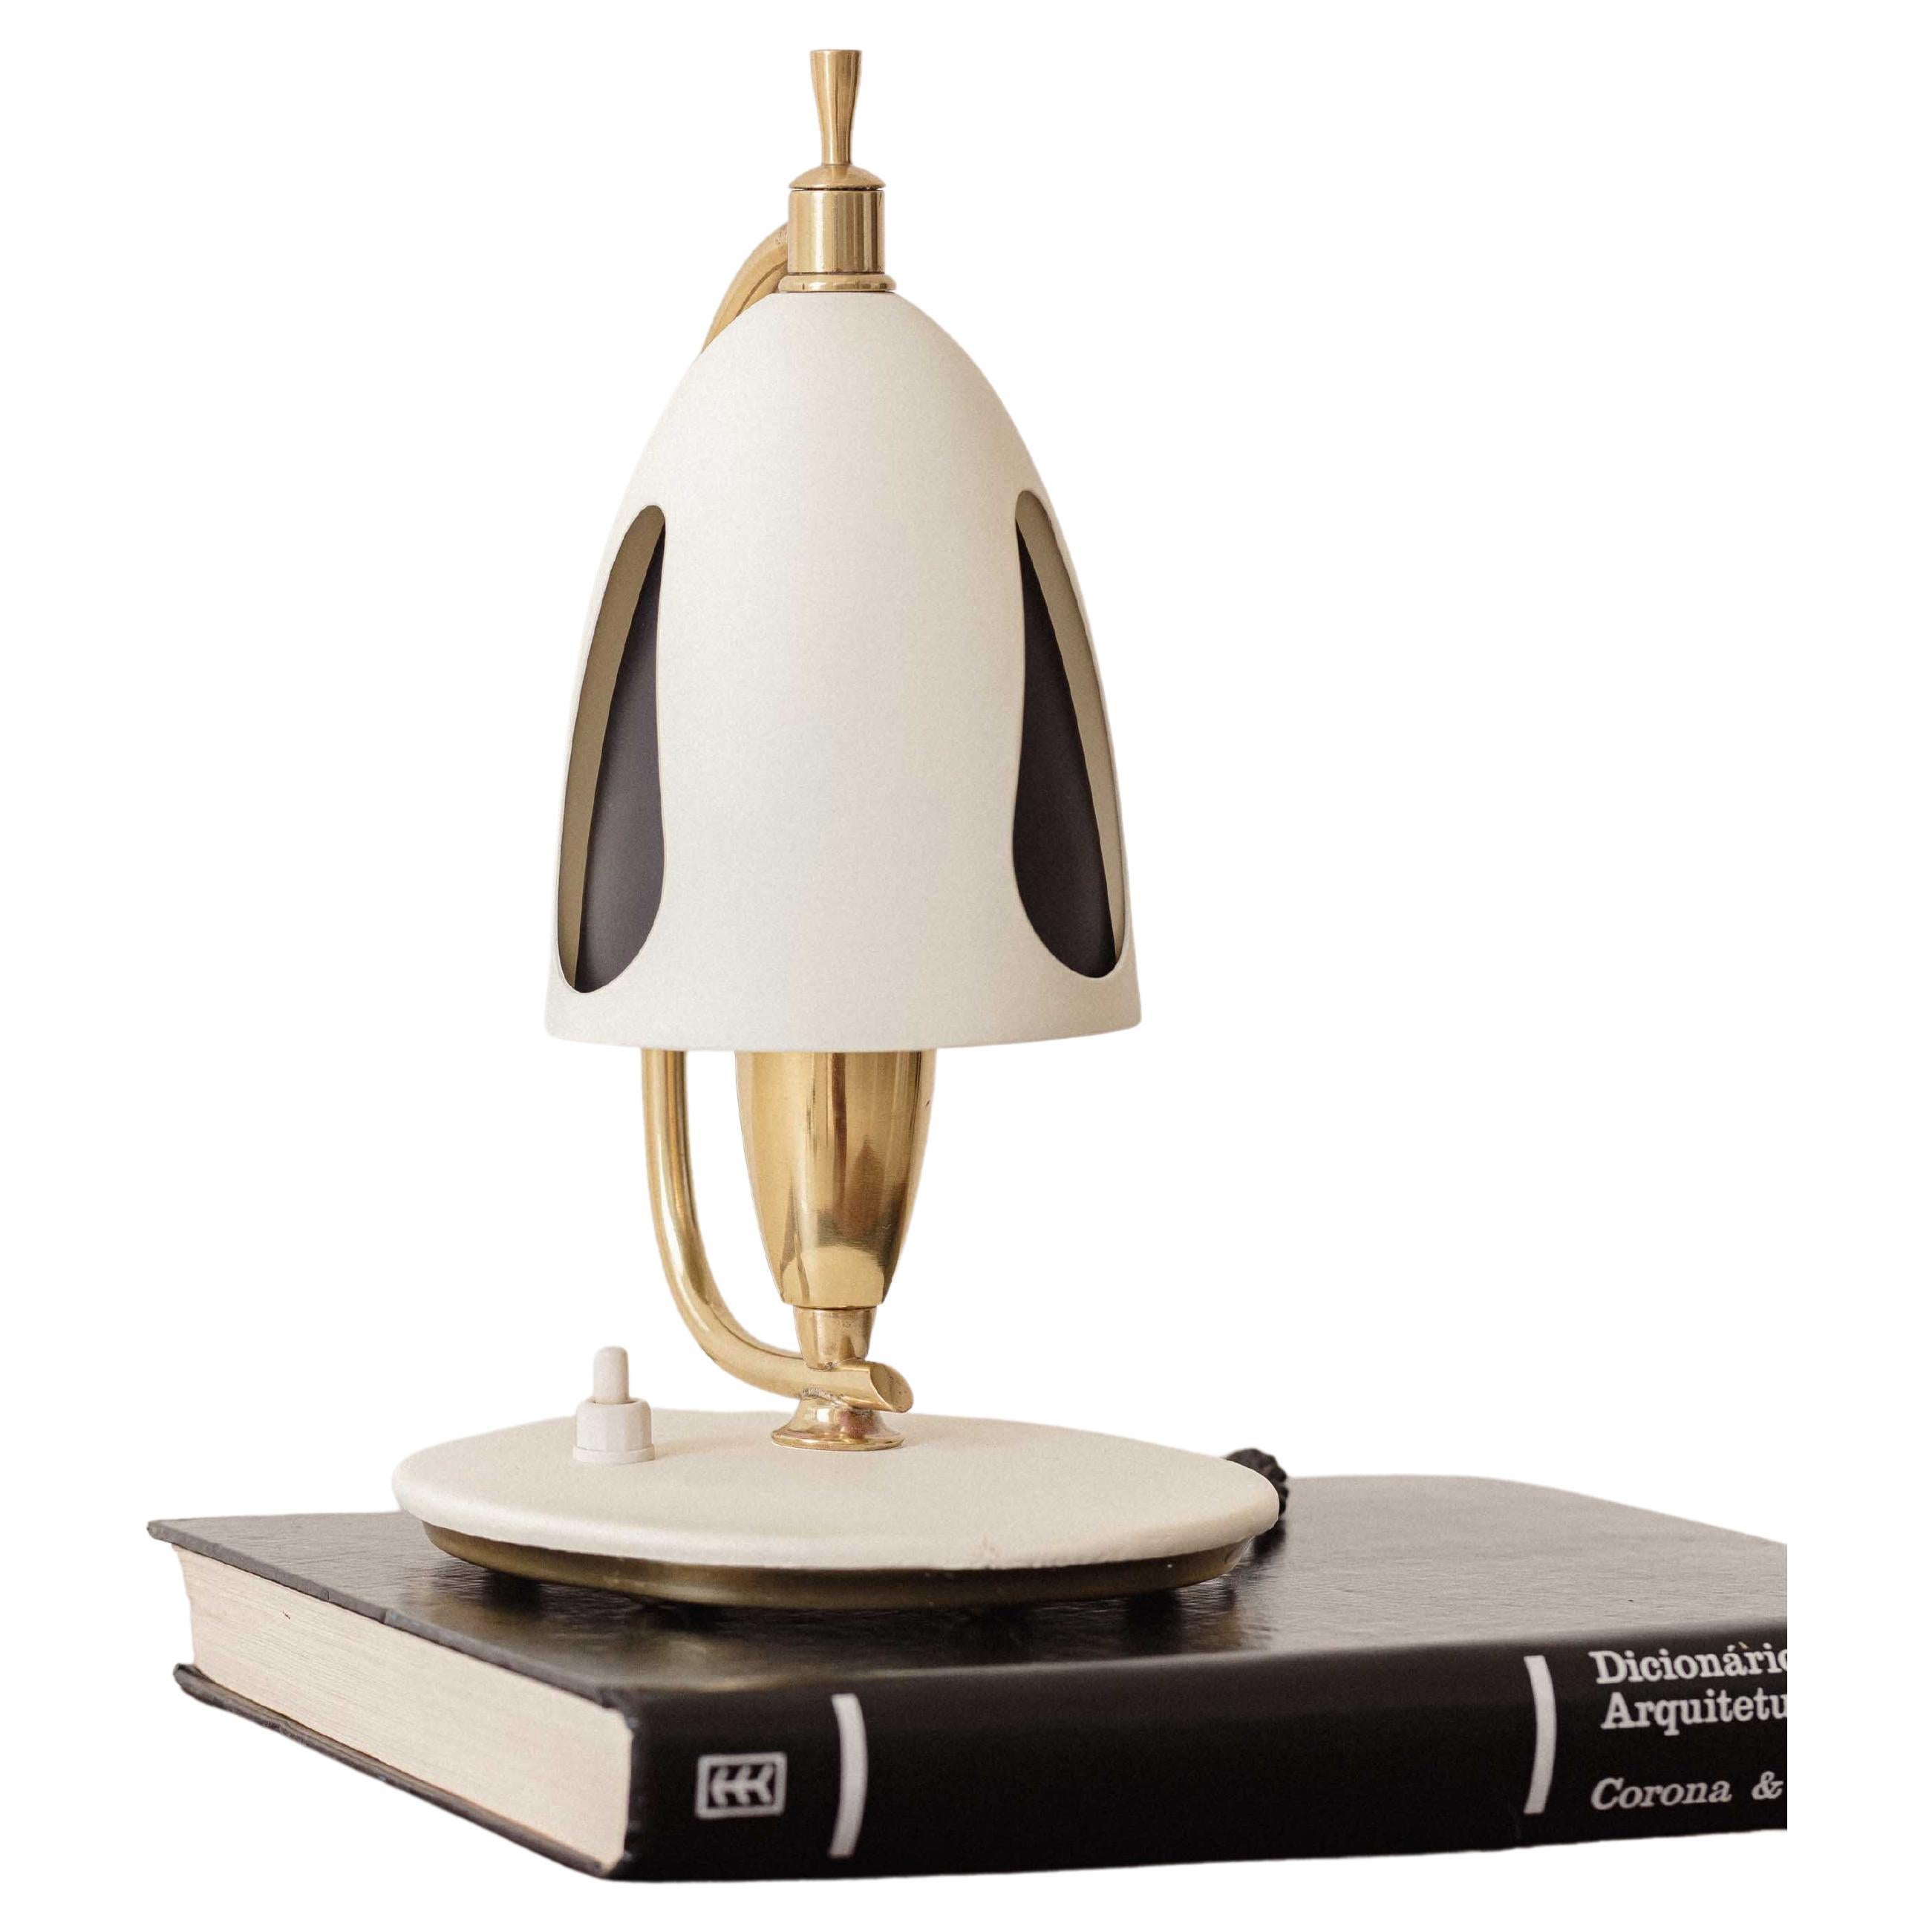 Midcentury Bedside Table Lamp, Brazilian Company Carlo Montalto & Filhos, 1950s For Sale